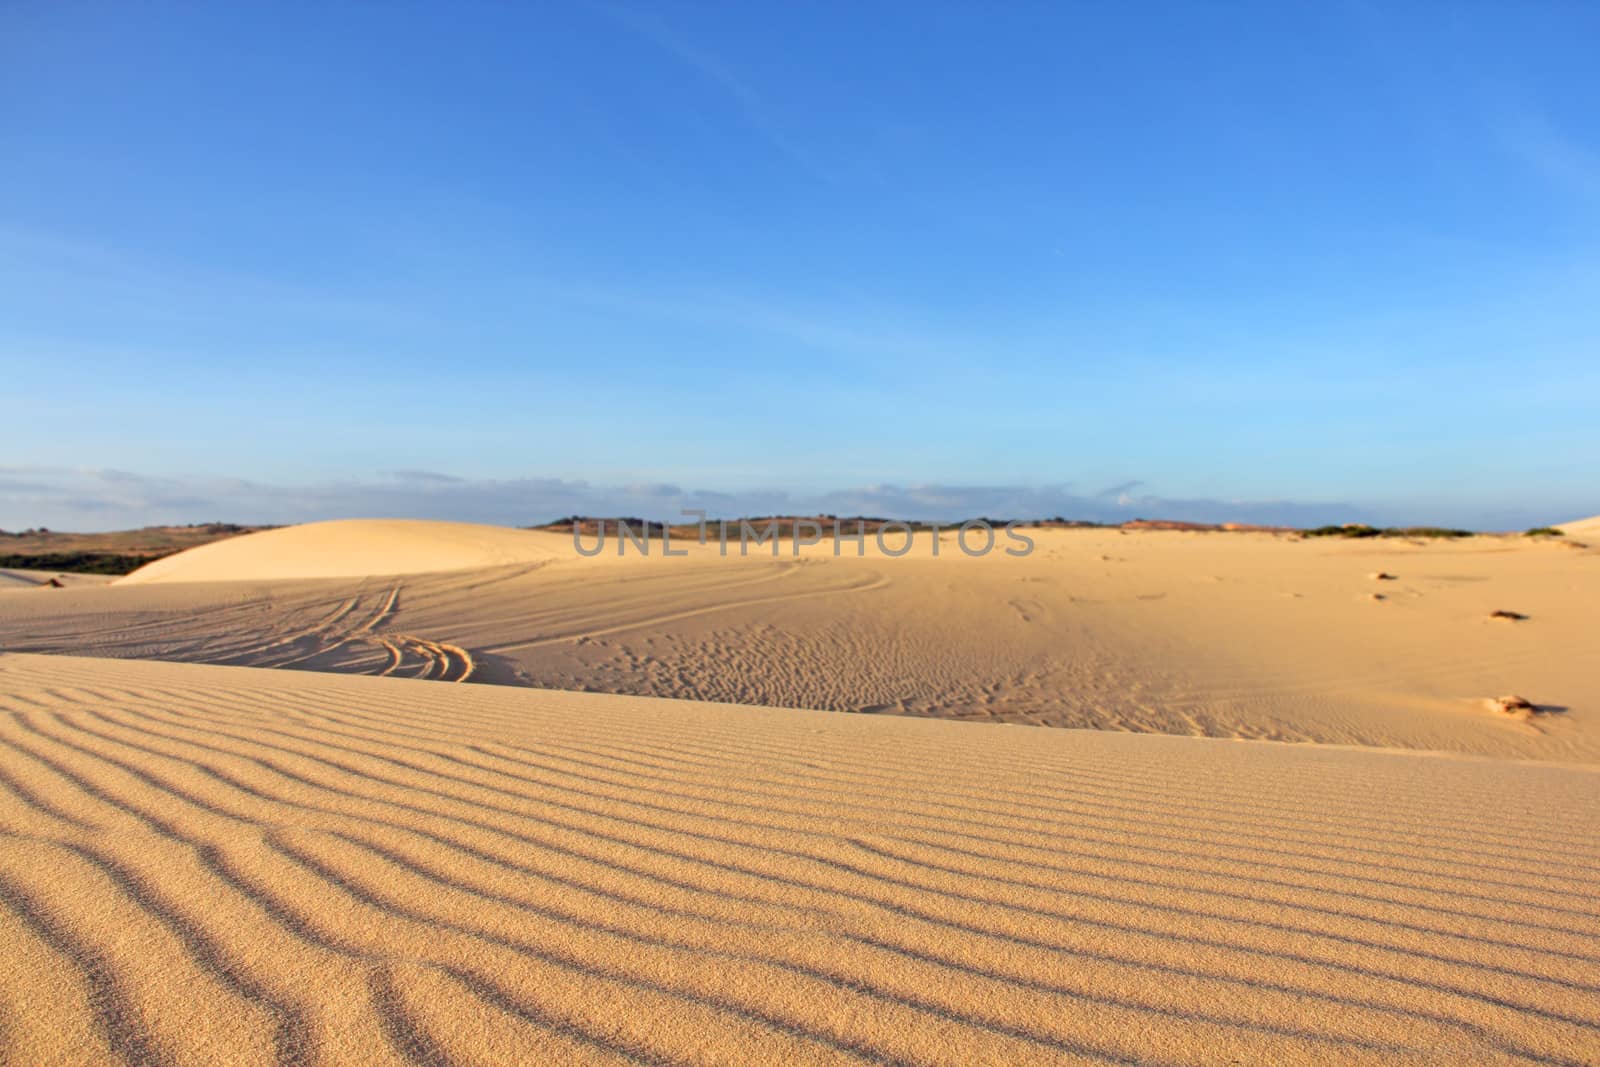 Sand desert landscape under bluy sky at sunny day